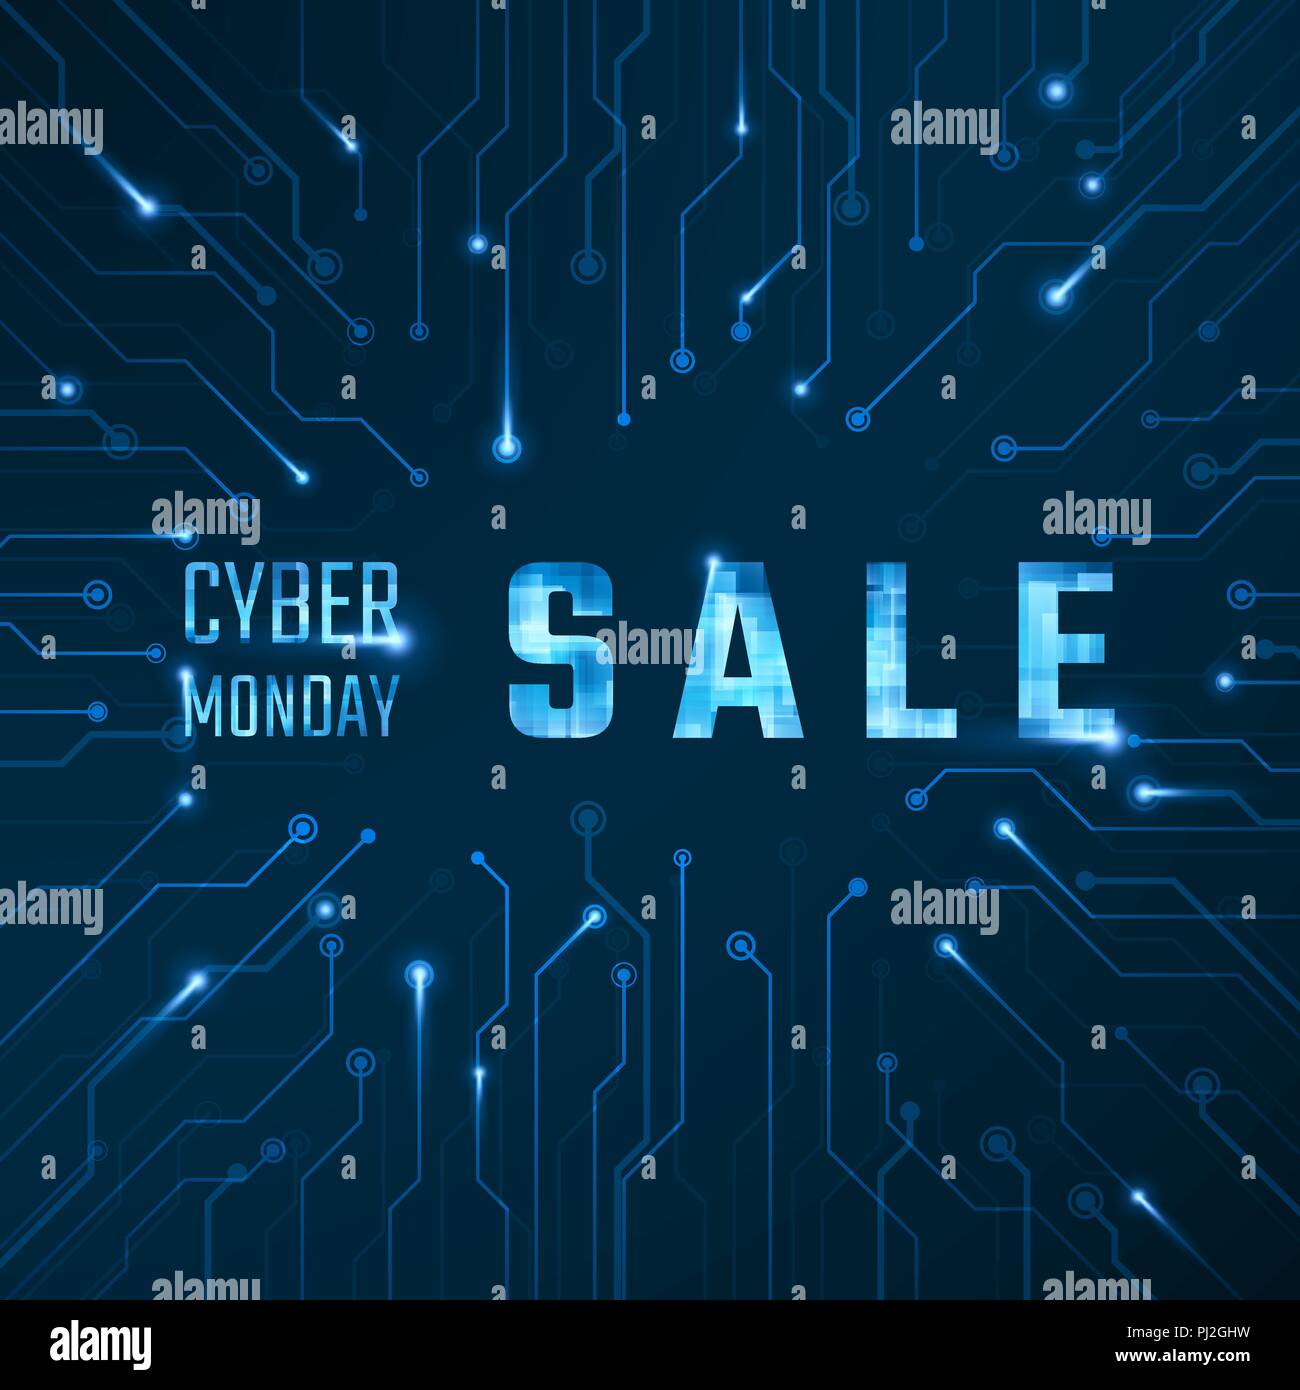 Cyber lunedì vendita banner di tecnologia. Illustrazione Vettoriale Illustrazione Vettoriale